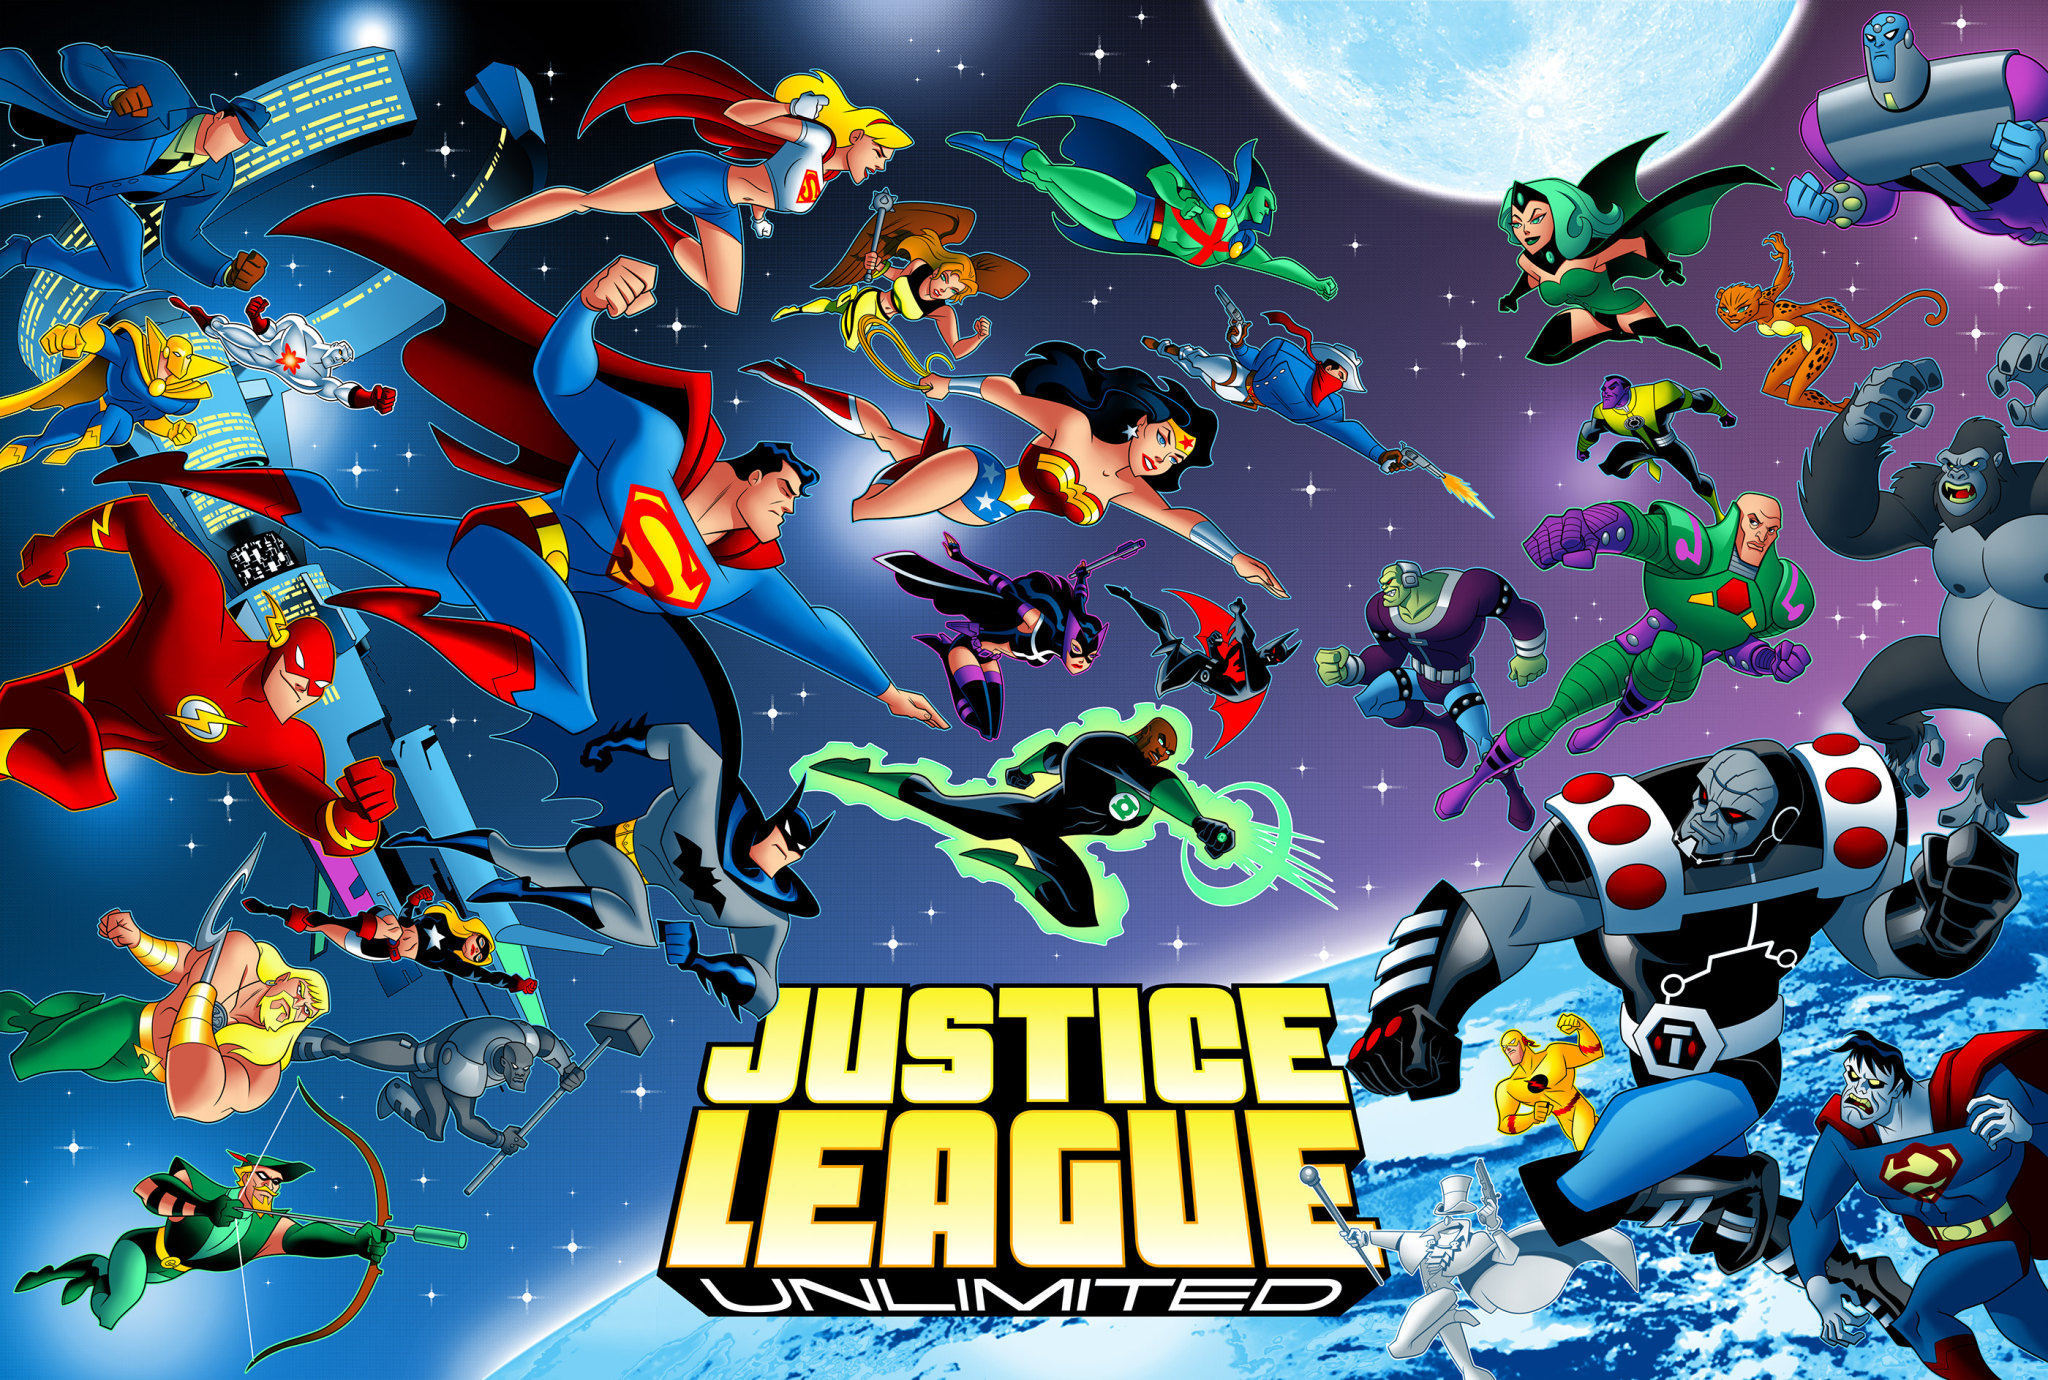 Justice League Unlimited Art